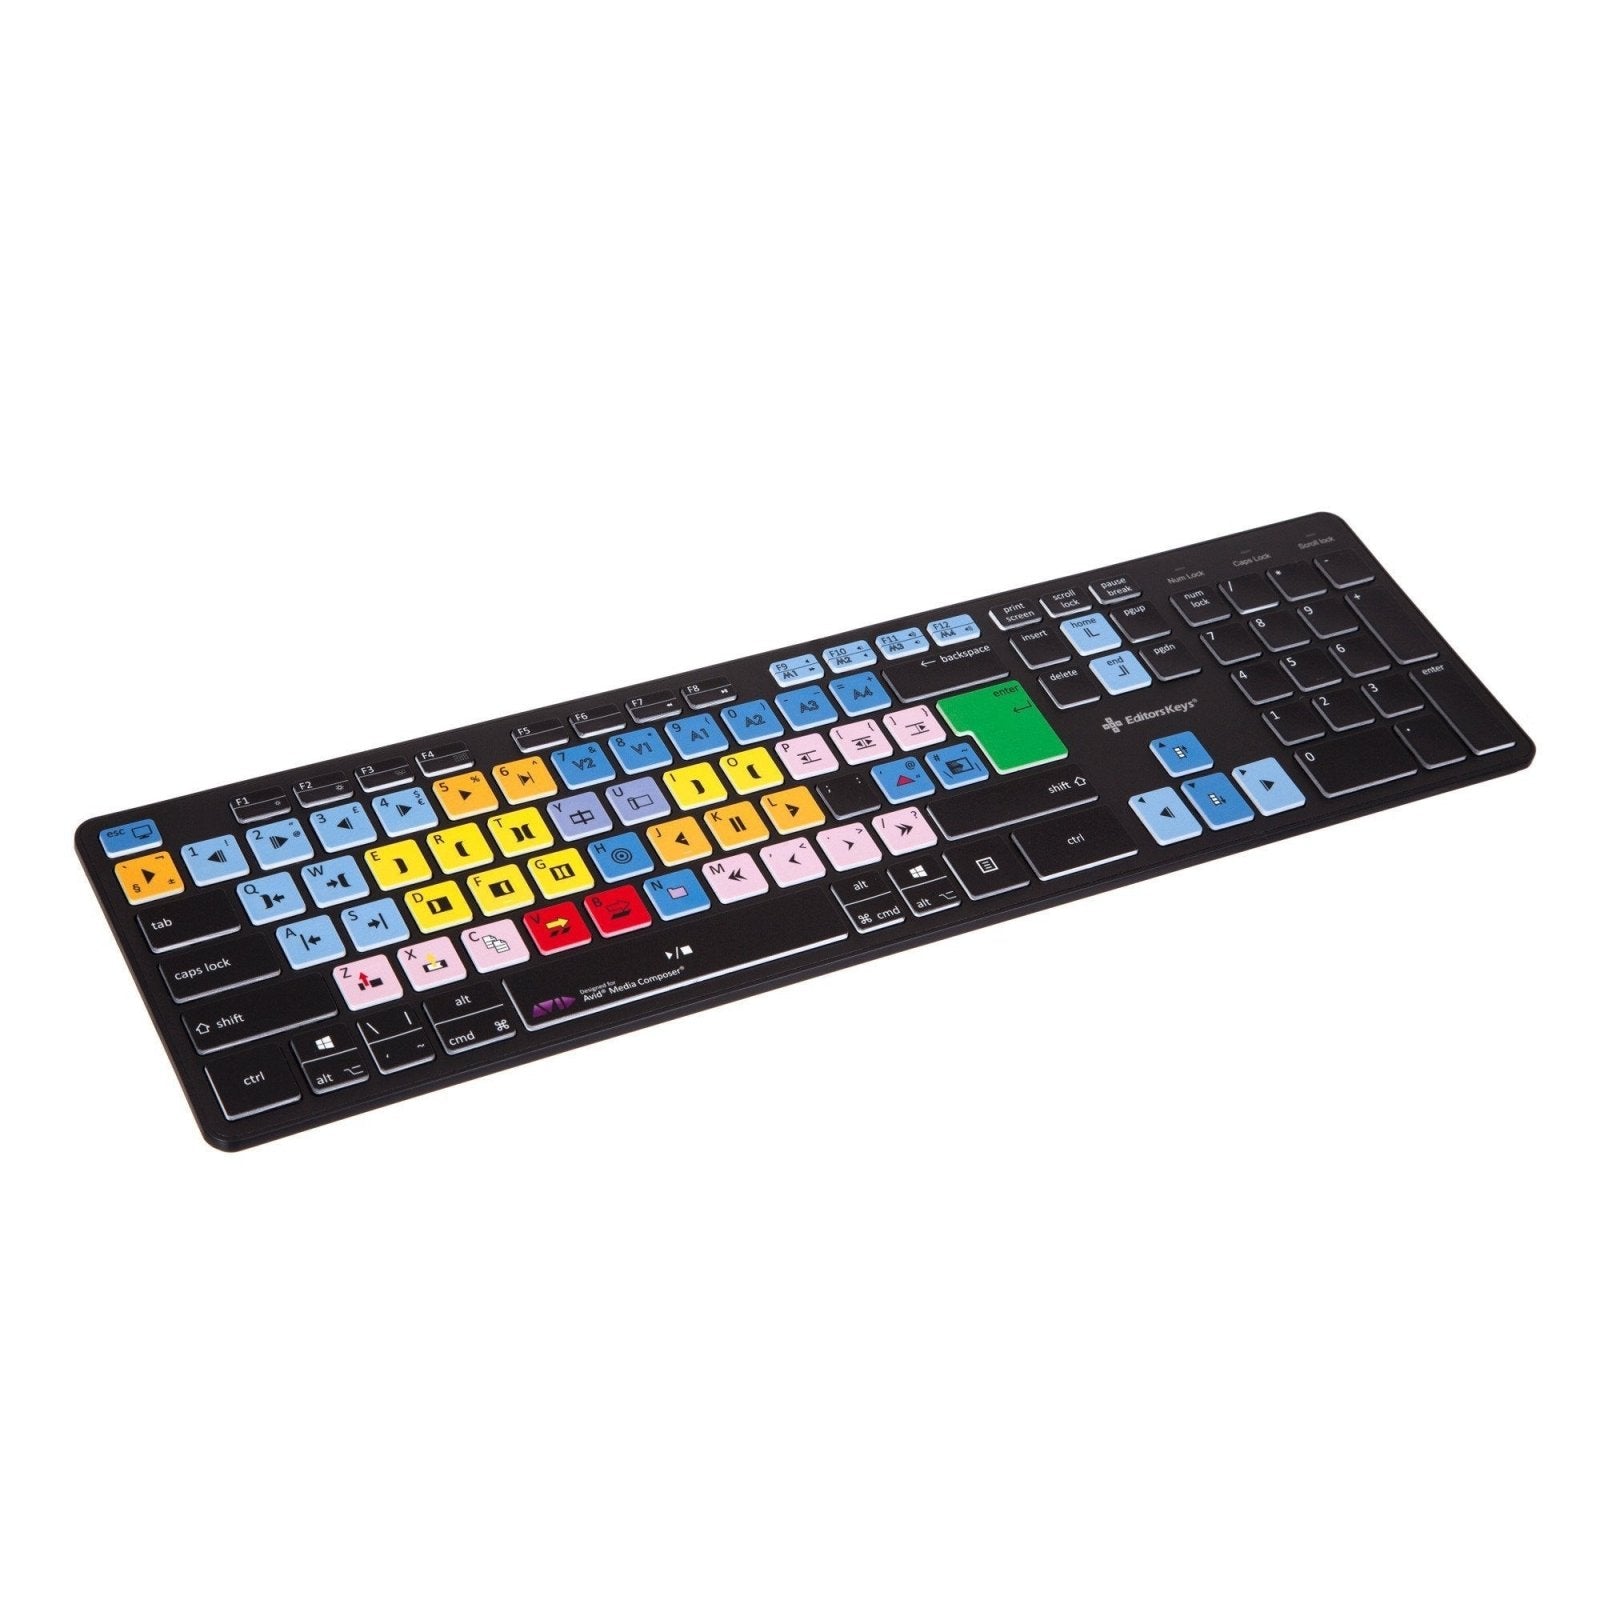 Avid Media Composer Keyboard - Slimline Wired/Wireless - Editors Keys